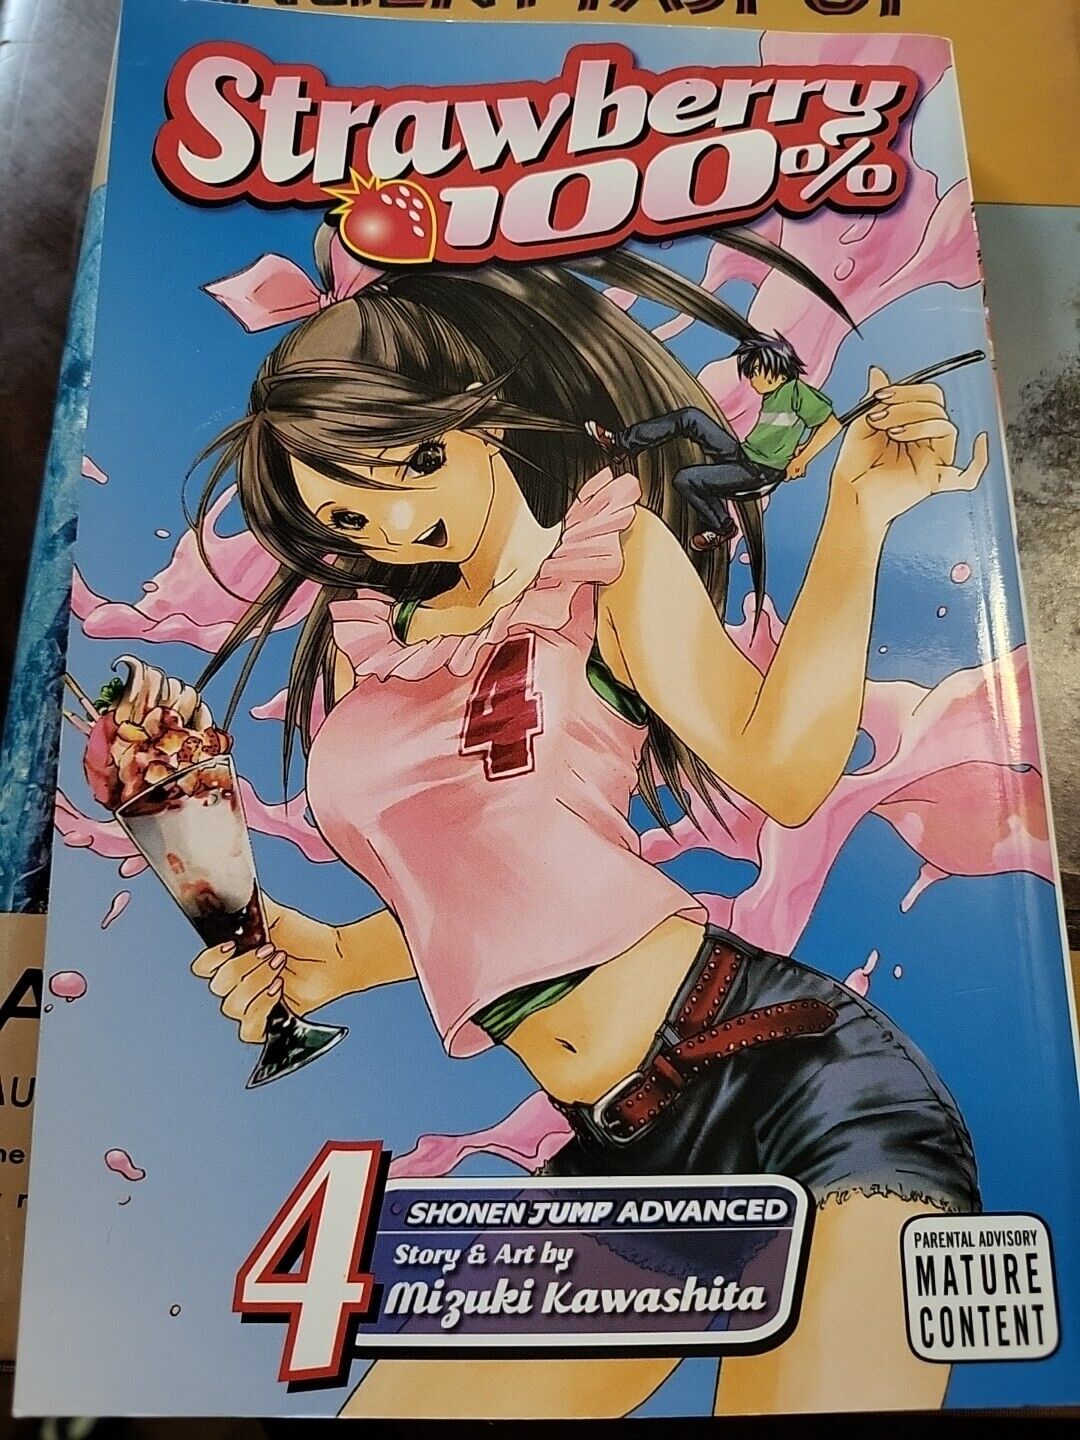 Strawberry 100% Volume 4 Manga First Printing Mizuki Kawashita (Viz April 2008)